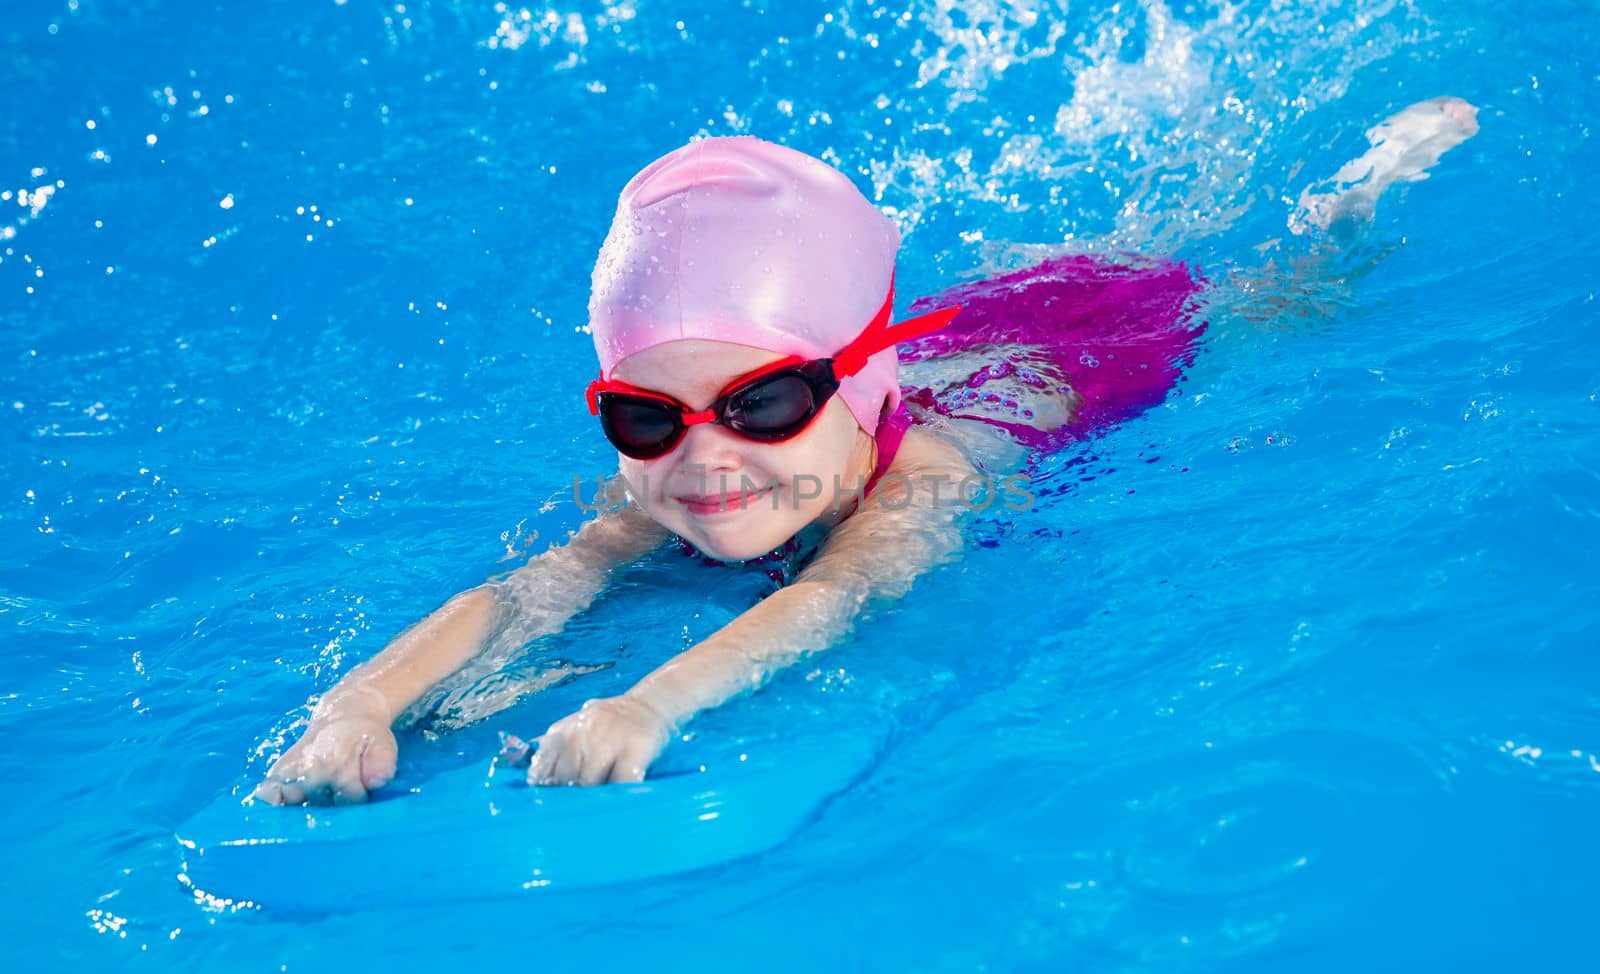 Preschool cute girl learning to swim in indoor pool with flutterboard